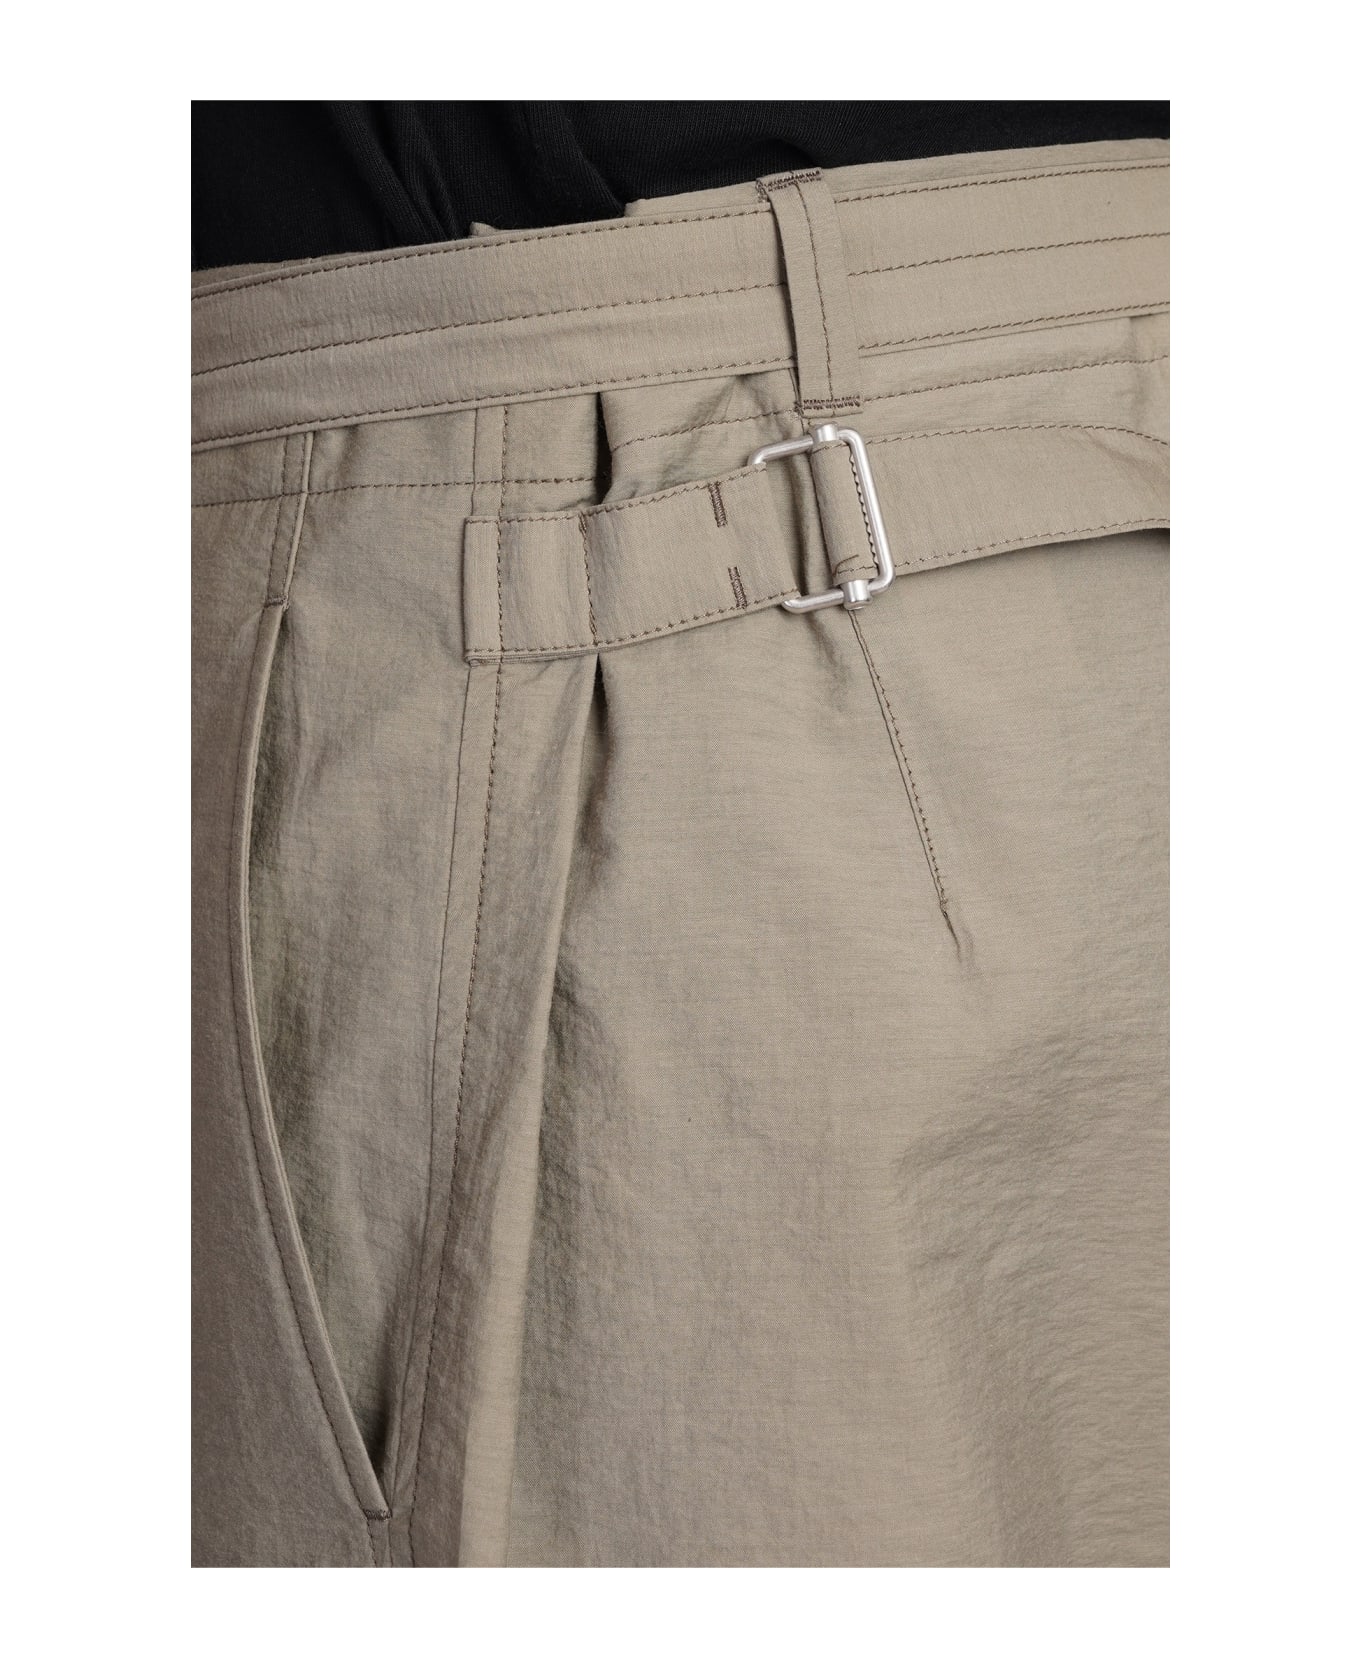 Lemaire Pants In Khaki Cotton - khaki